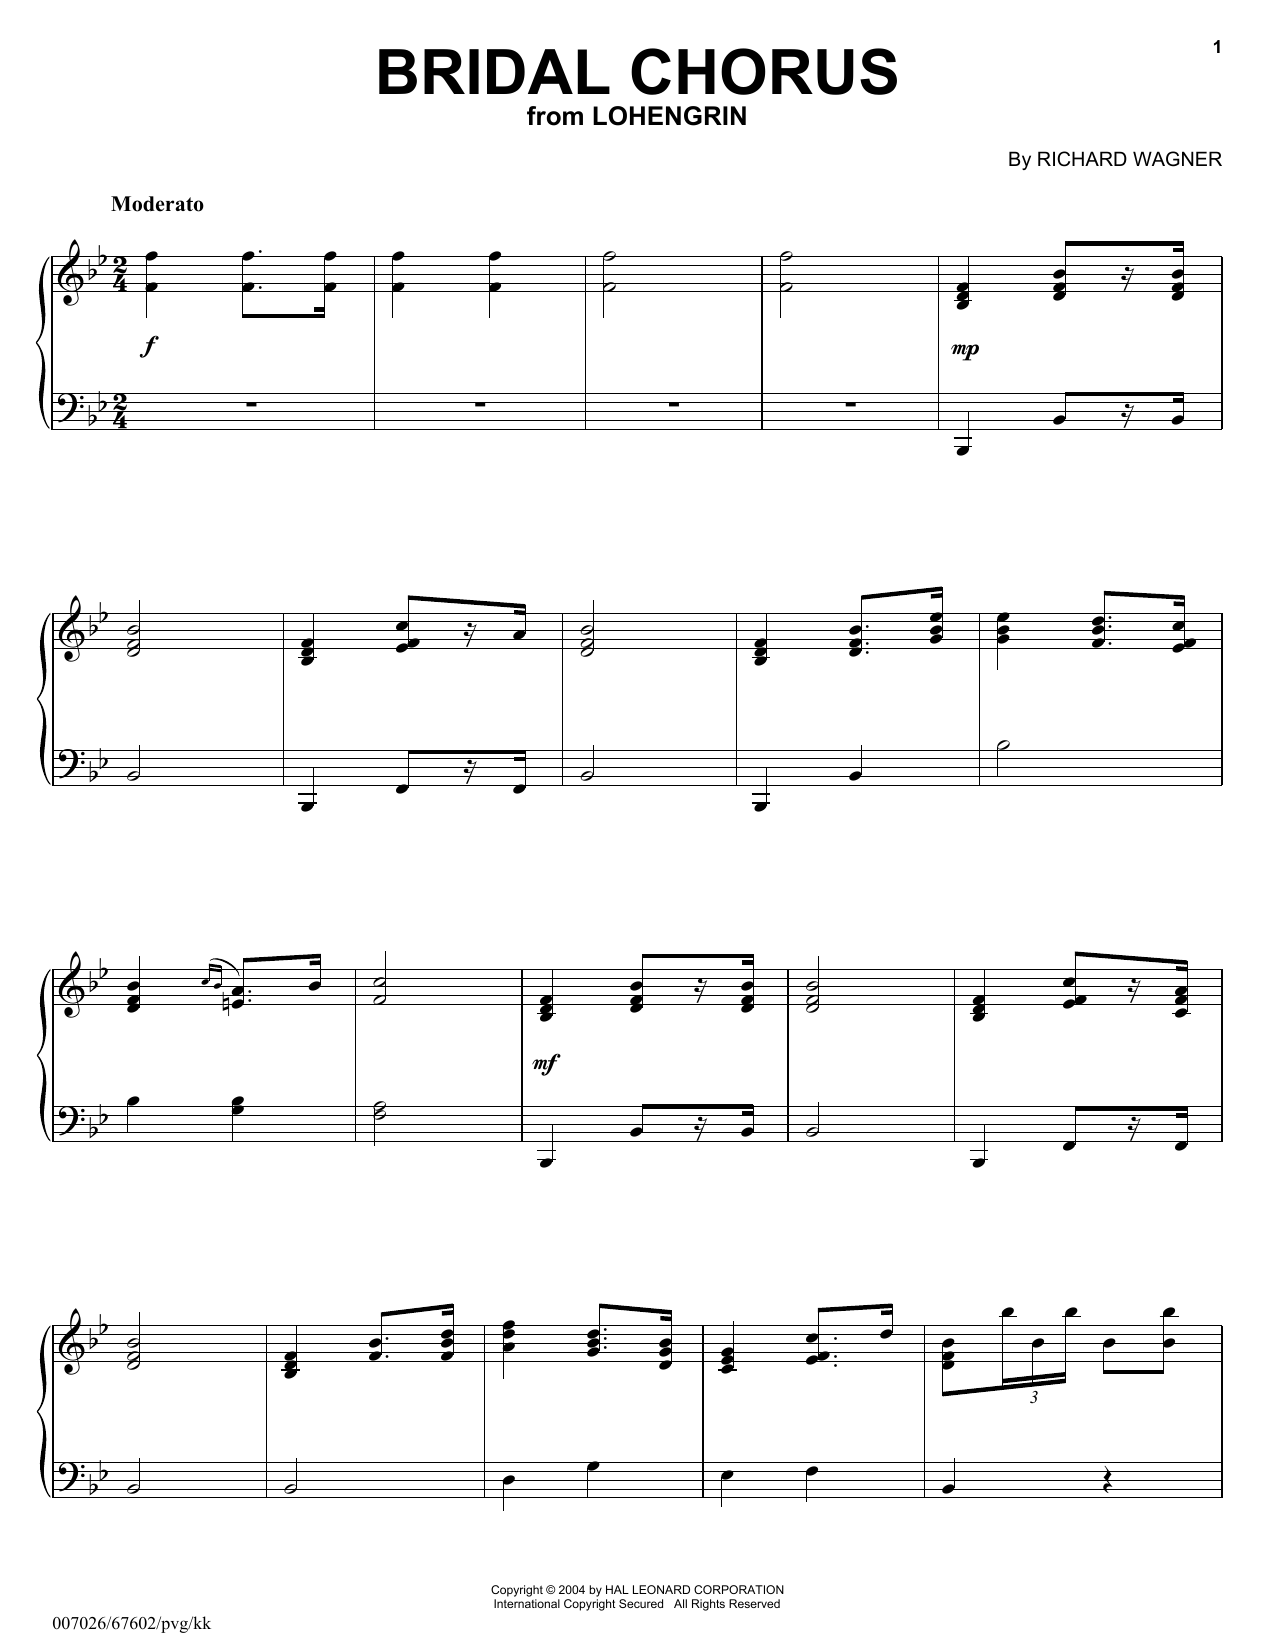 Richard Wagner Bridal Chorus Sheet Music Notes & Chords for Piano - Download or Print PDF